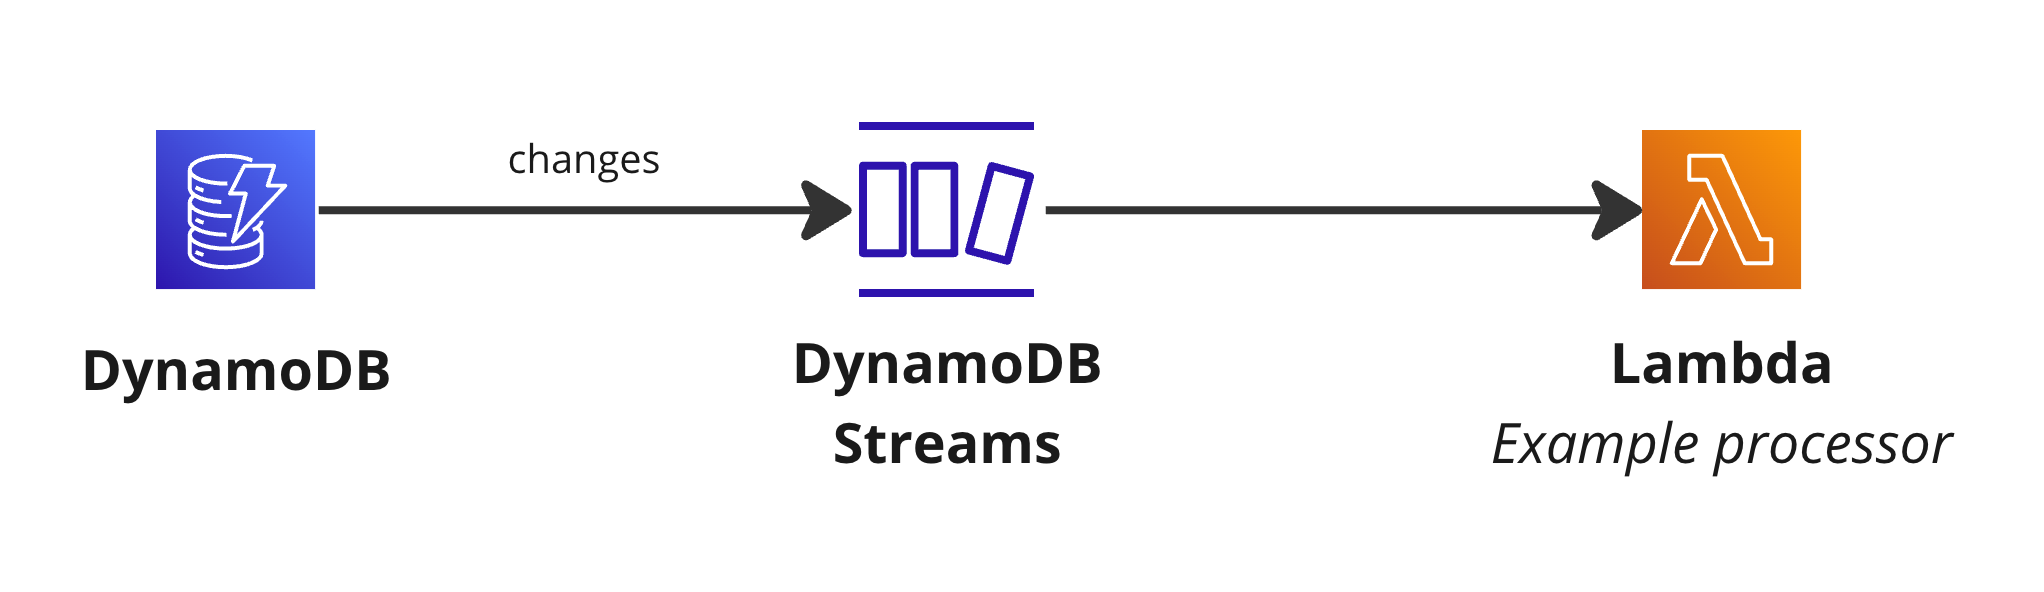 Example of DynamoDB streams into Lambda